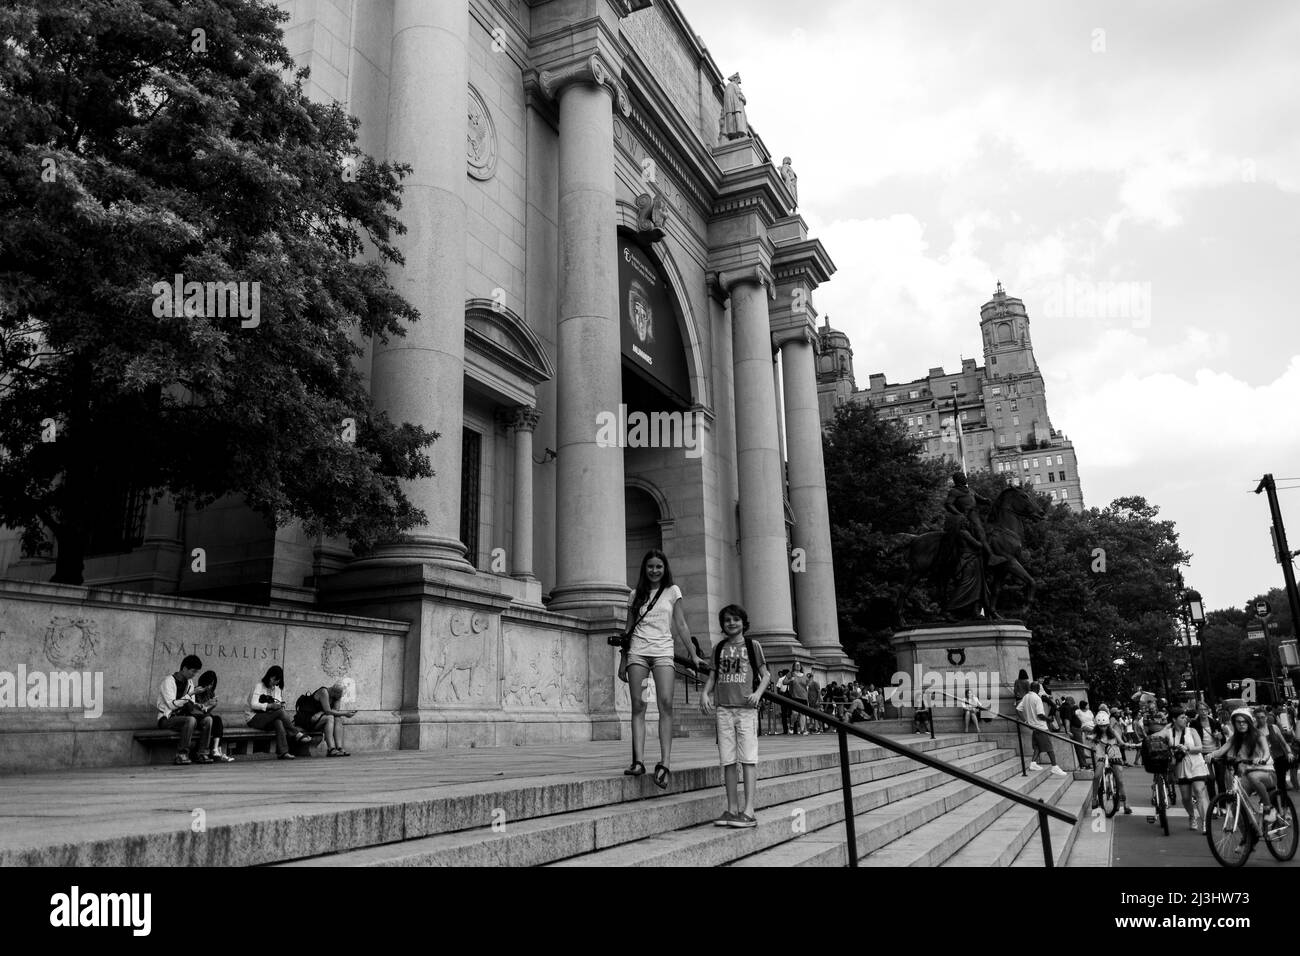 81 STREET - MUSEUM OF NATURAL HISTORY, New York City, NY, États-Unis, lieu de tournage de « Night at the Museum » Banque D'Images